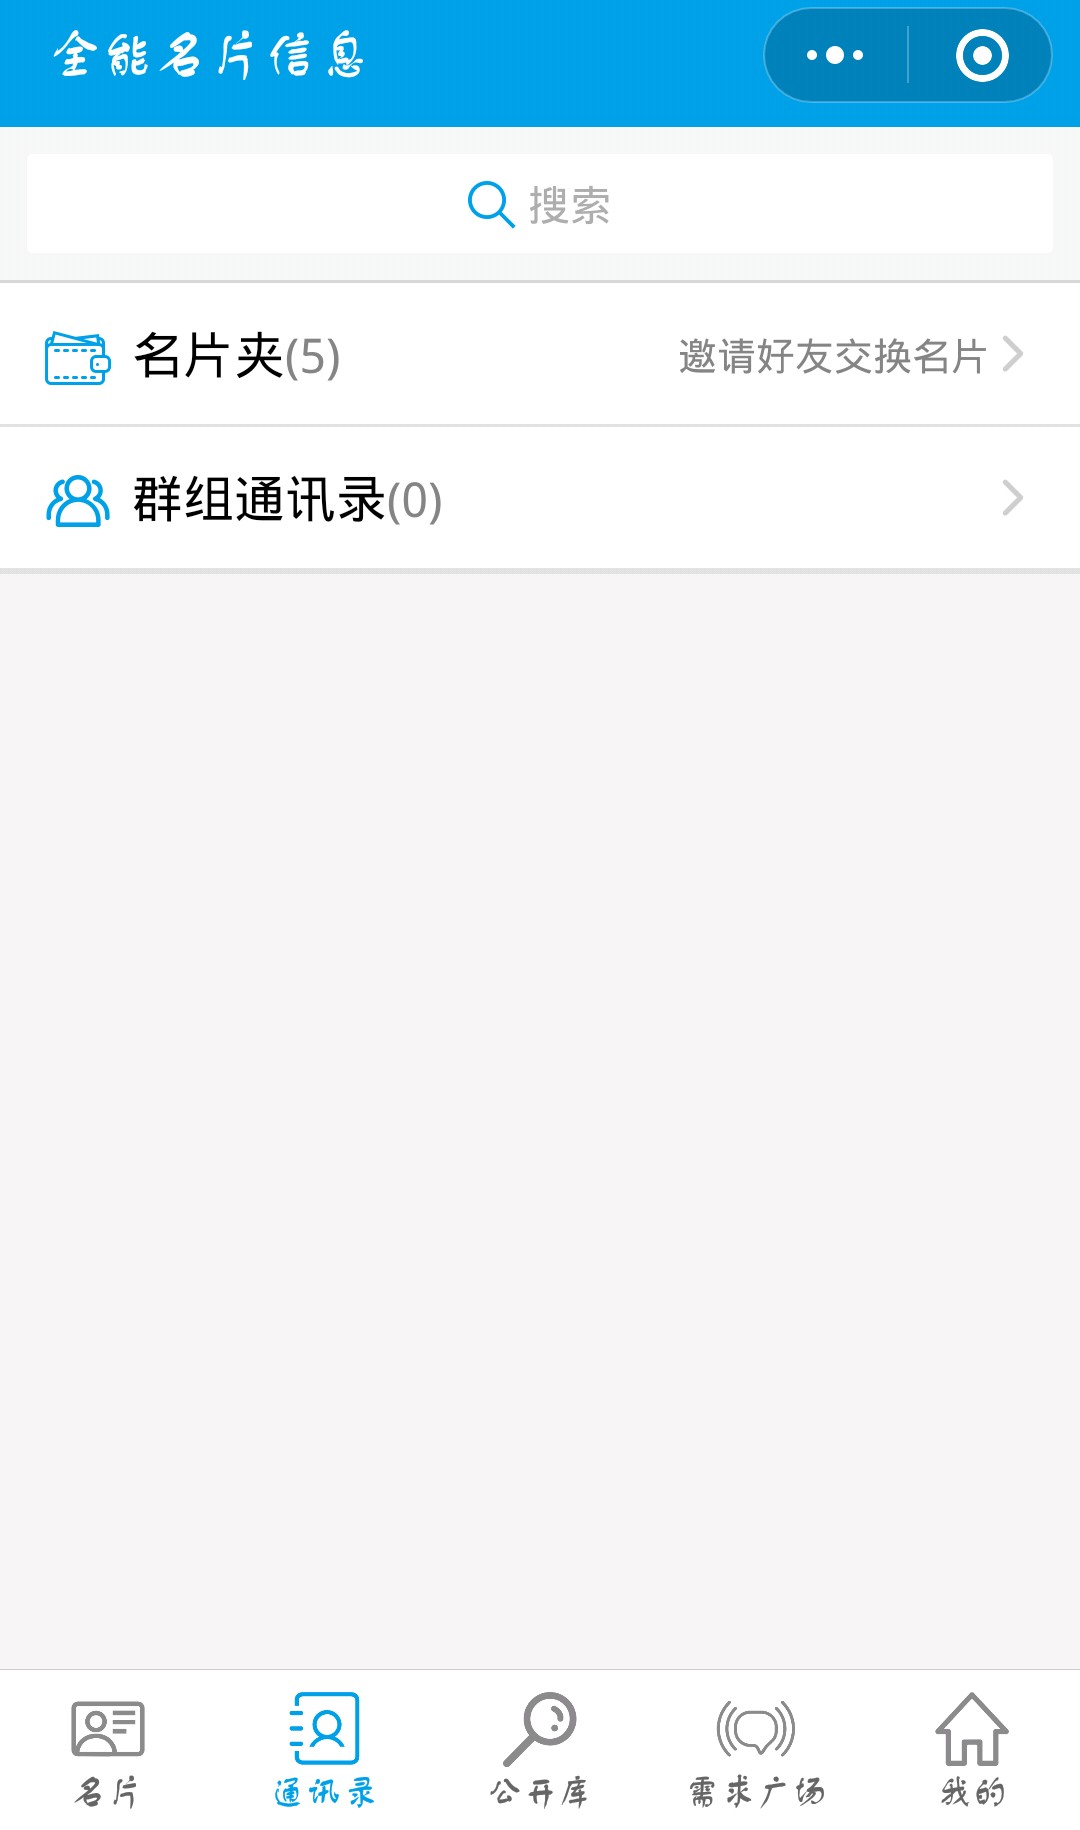 C:\Users\Lenovo\AppData\Local\Temp\WeChat Files\eabf110e10d13d0df446b8eea9a9bea.jpg